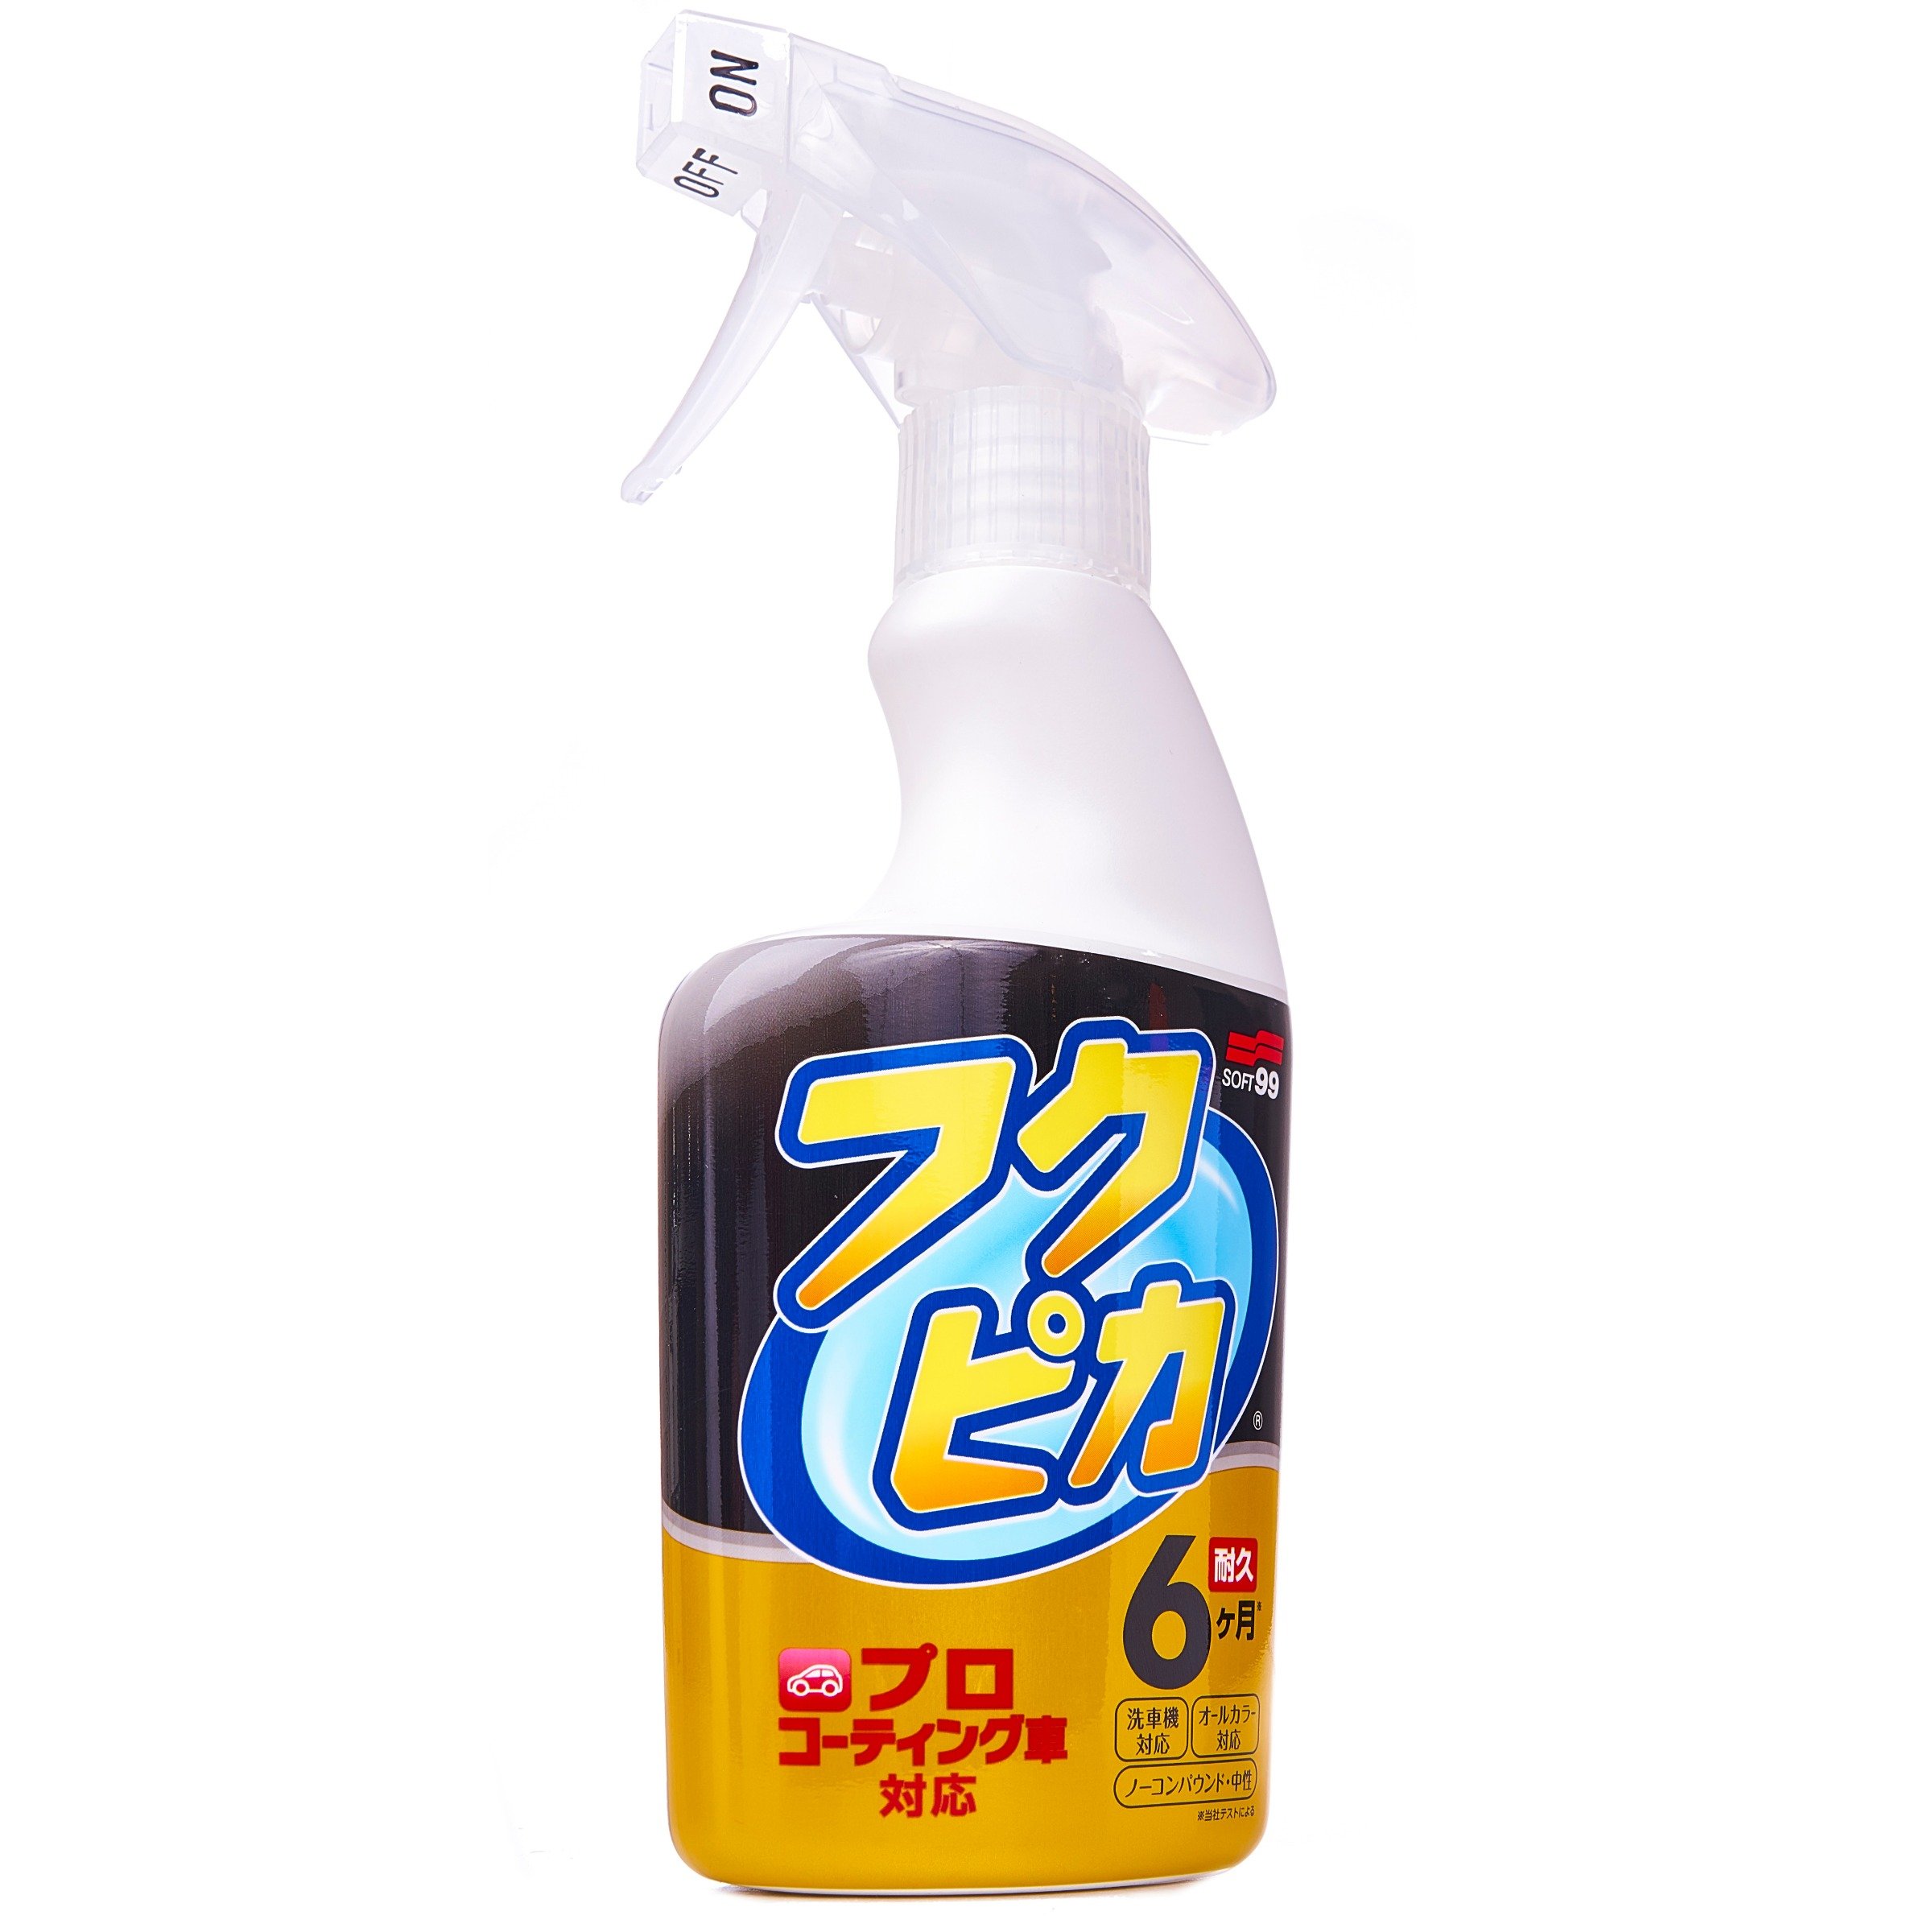 Fukupika Spray Strong Type